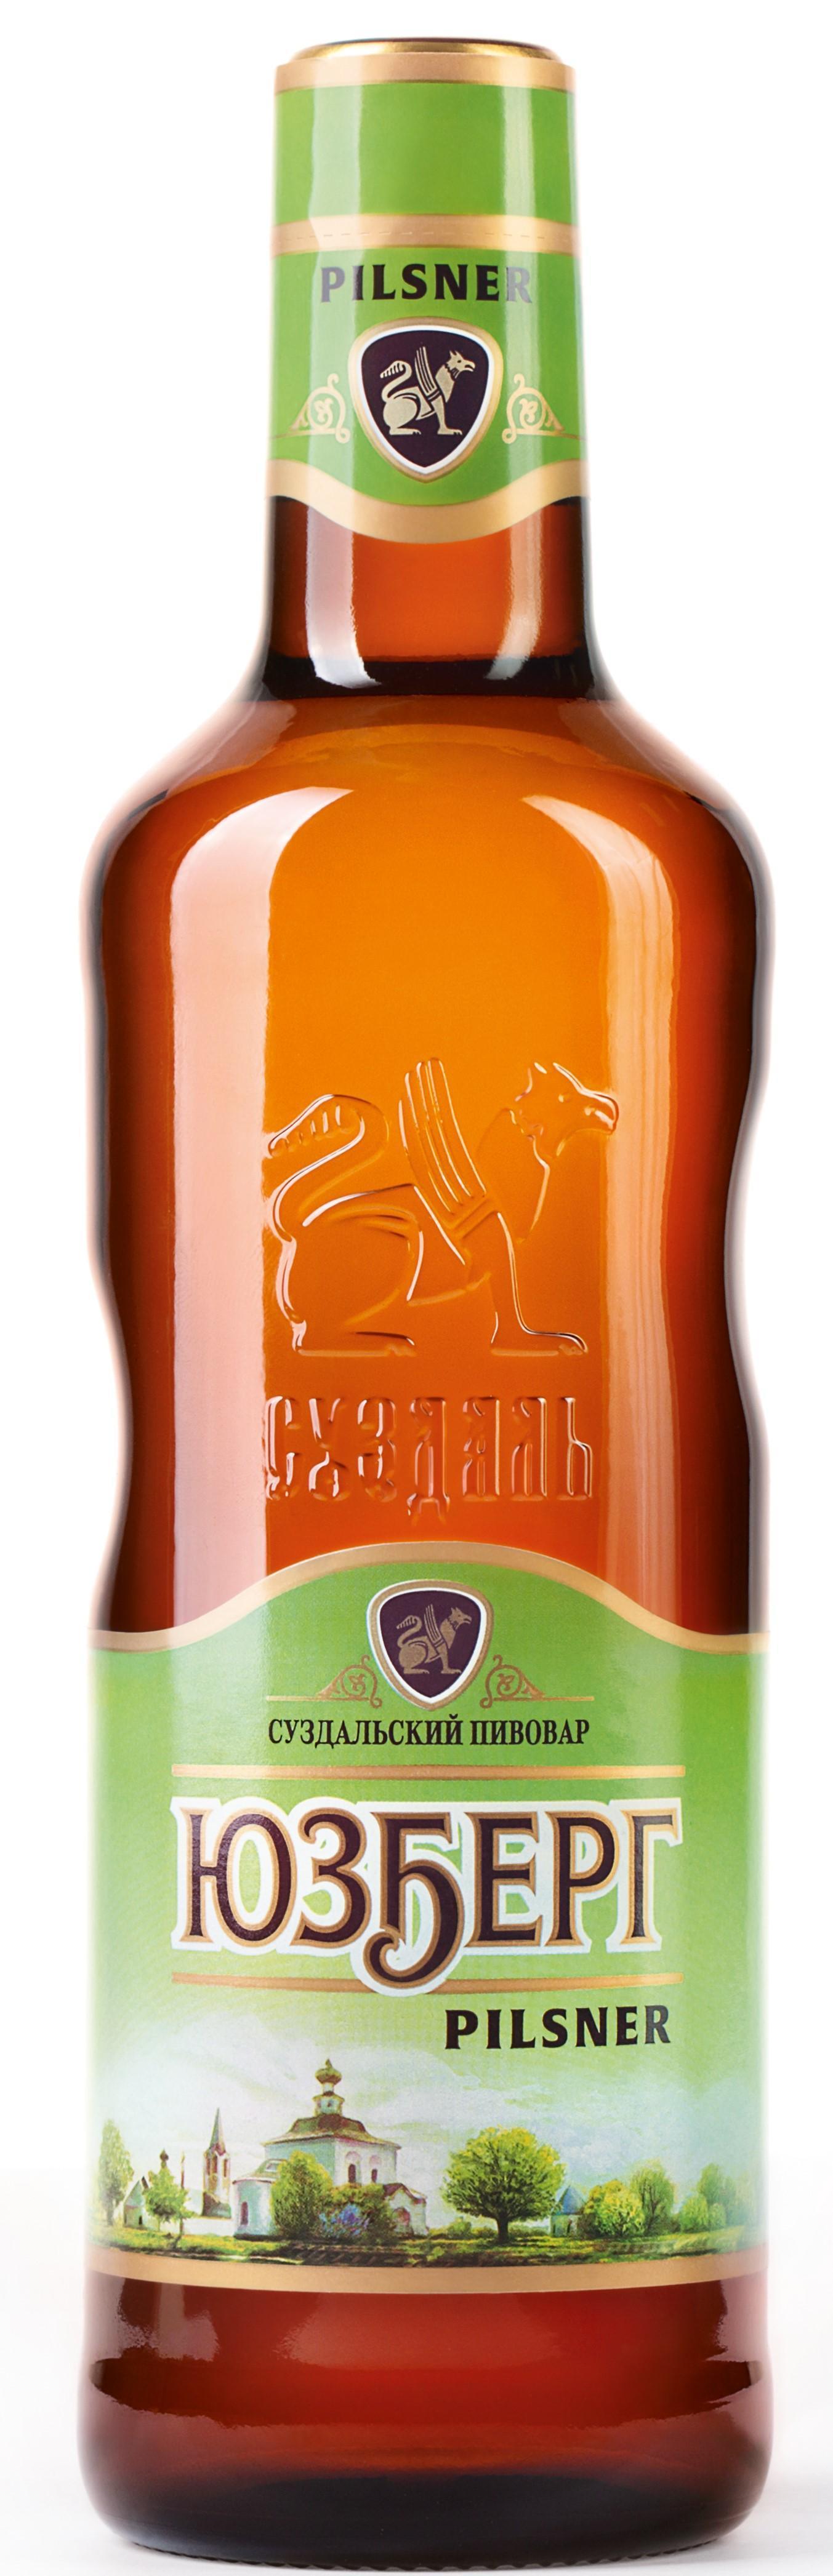 Пиво Юзберг Pilsner светлое 4,9% 470 мл., стекло